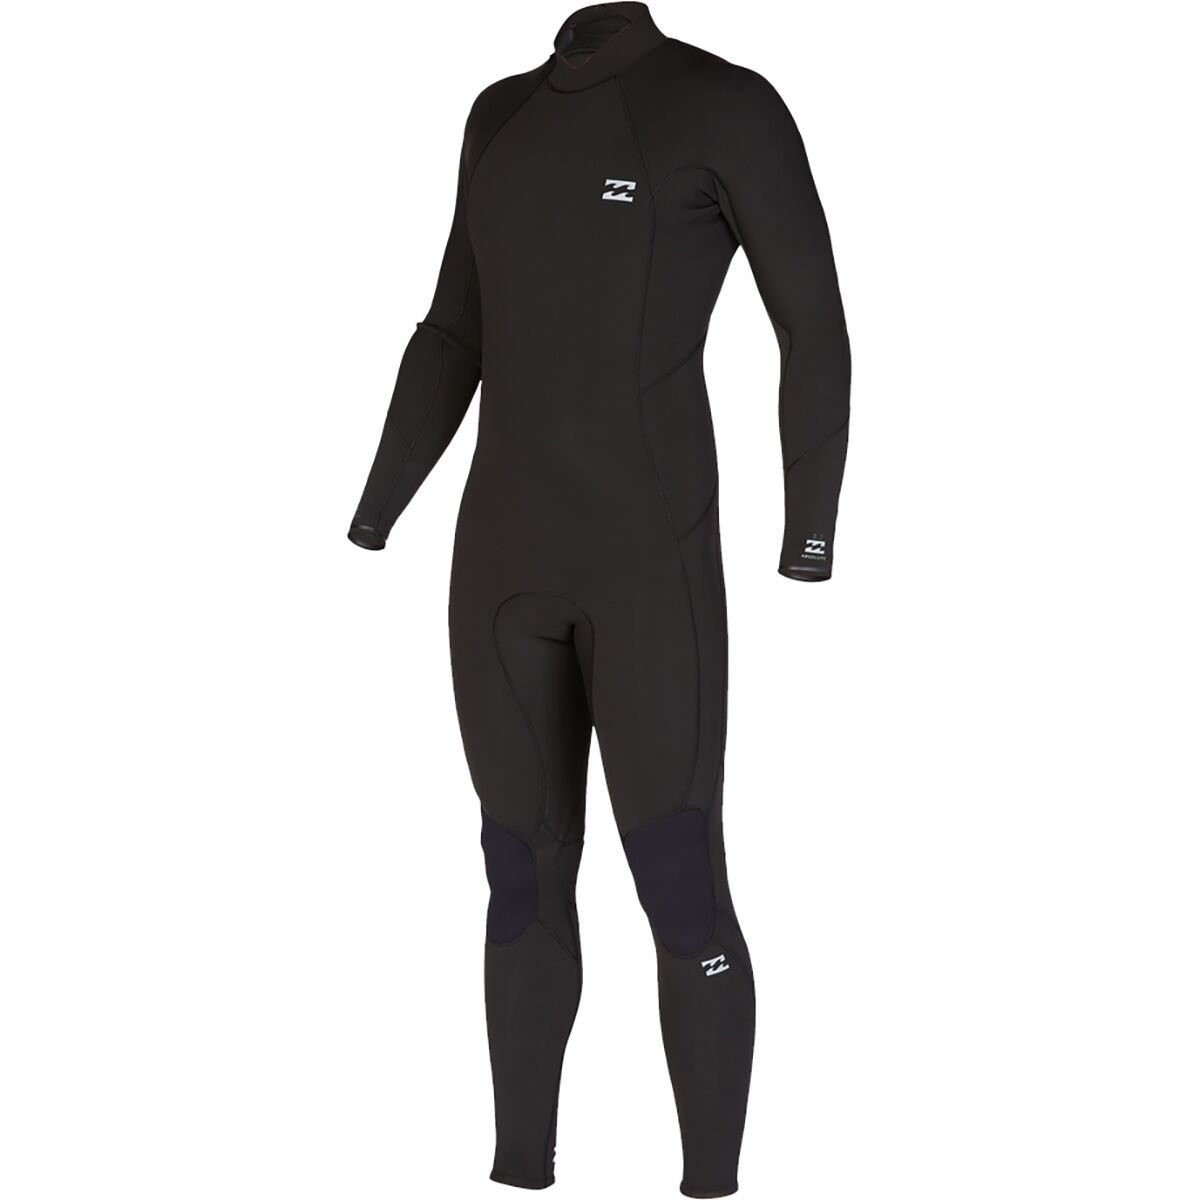 Billabong 4/3 Absolute Back-Zip Full GBS Wetsuit - Men's